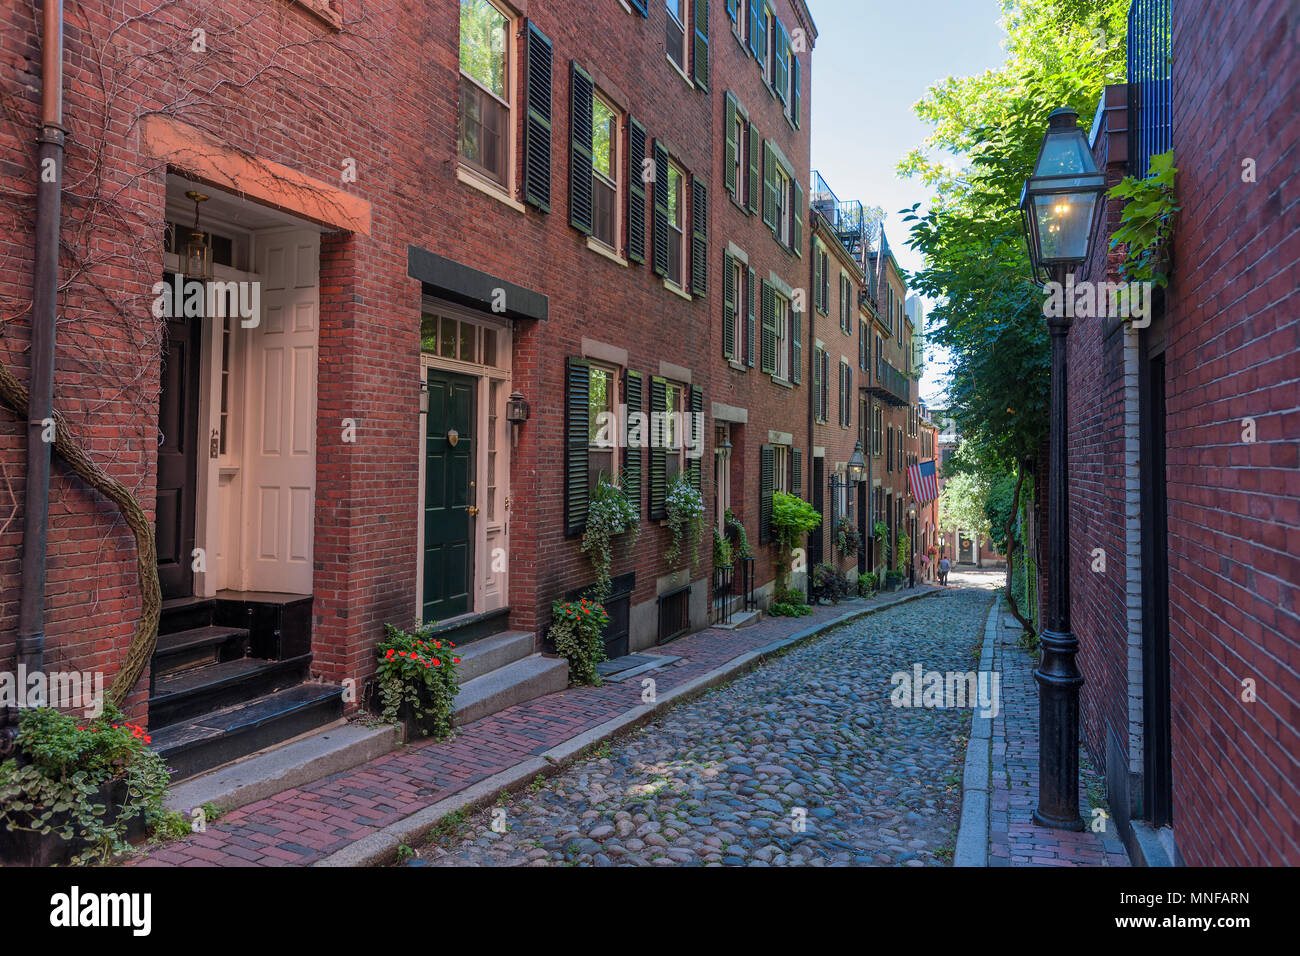 Boston, Massachusetts, USA - September 12, 2016: Acorn Street on Beacon Hill in Boston, Massachusetts.  It's narrow cobblestone street lined with narr Stock Photo